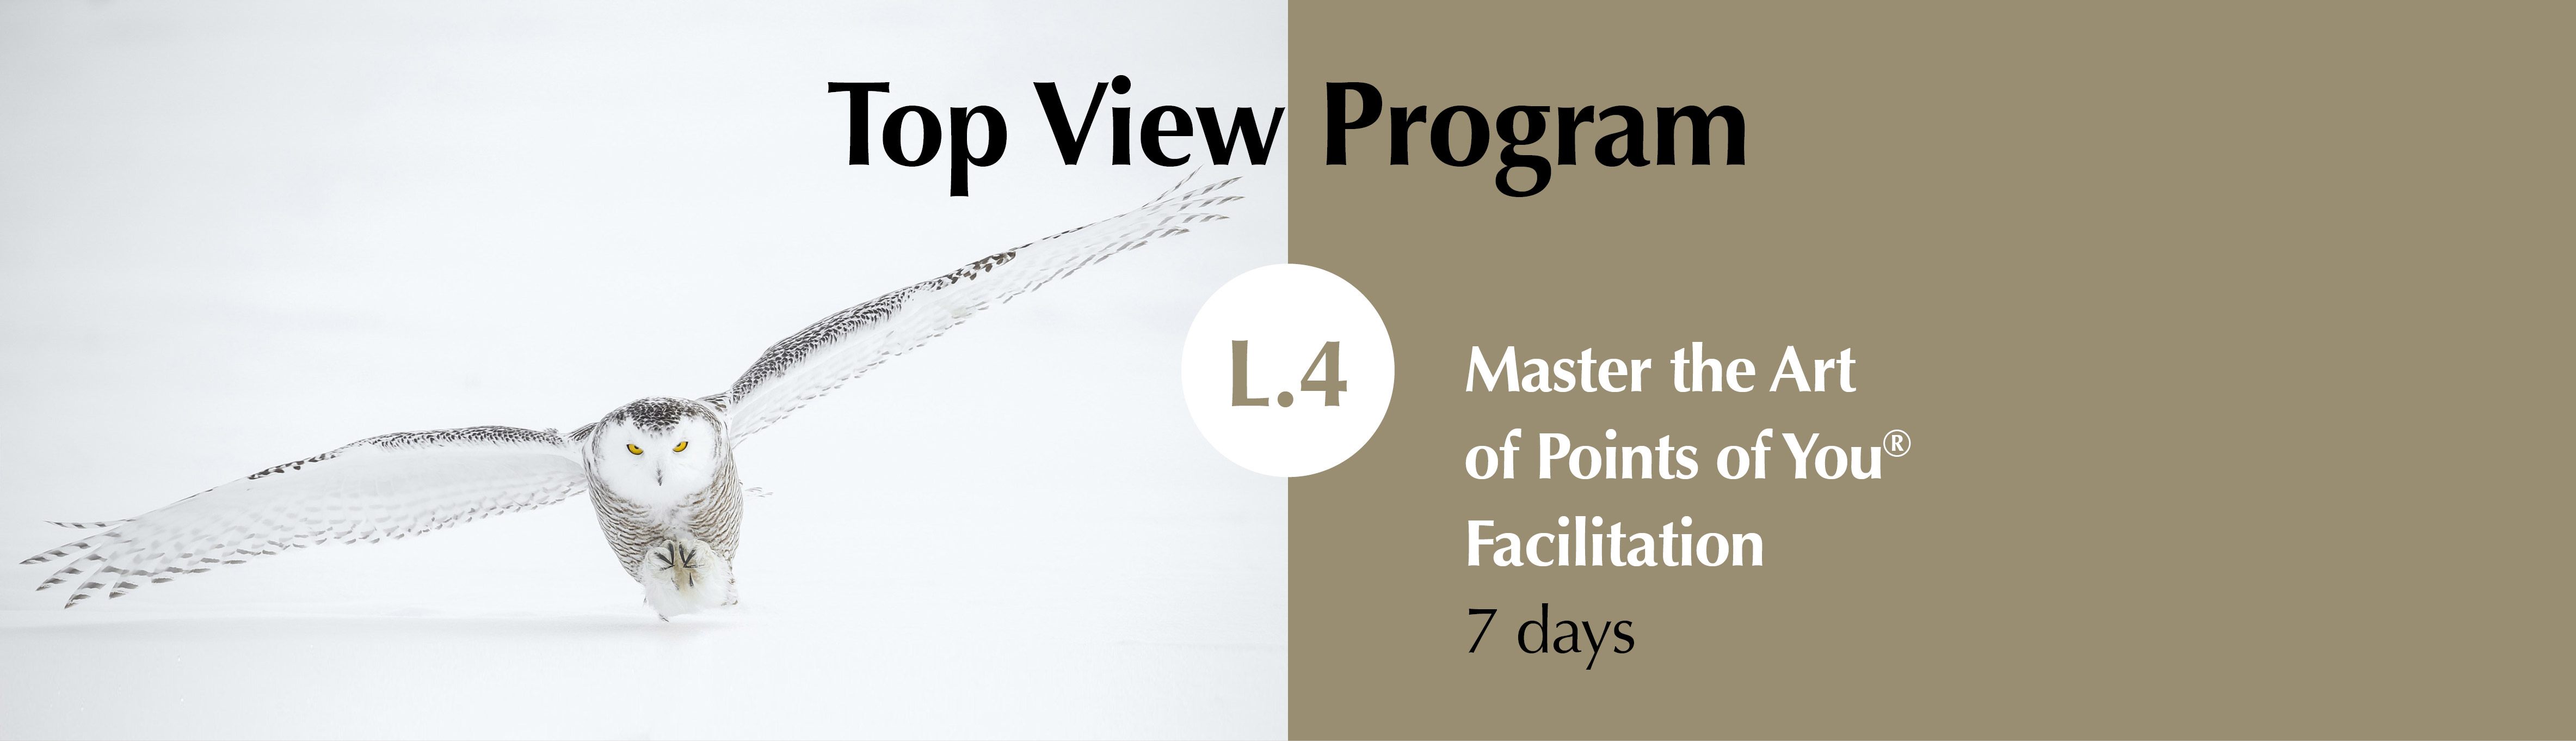 Top View Program Points of You creatividad coachin